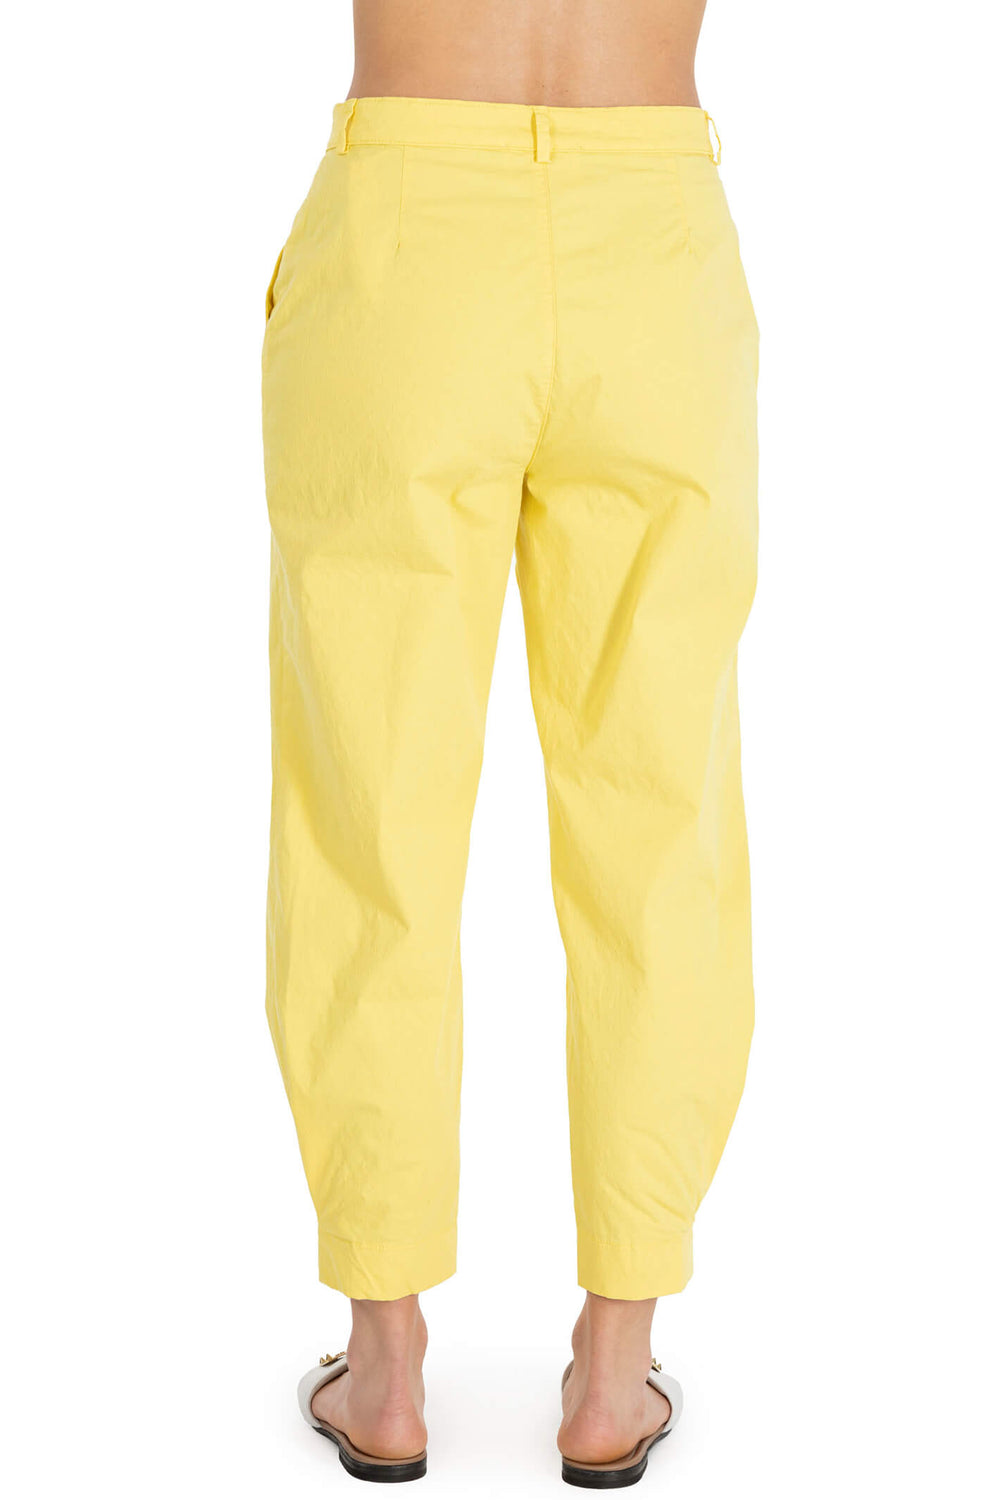 Elisa Cavaletti ELP236052300 Amaretto Yellow Trousers - Experience Boutique